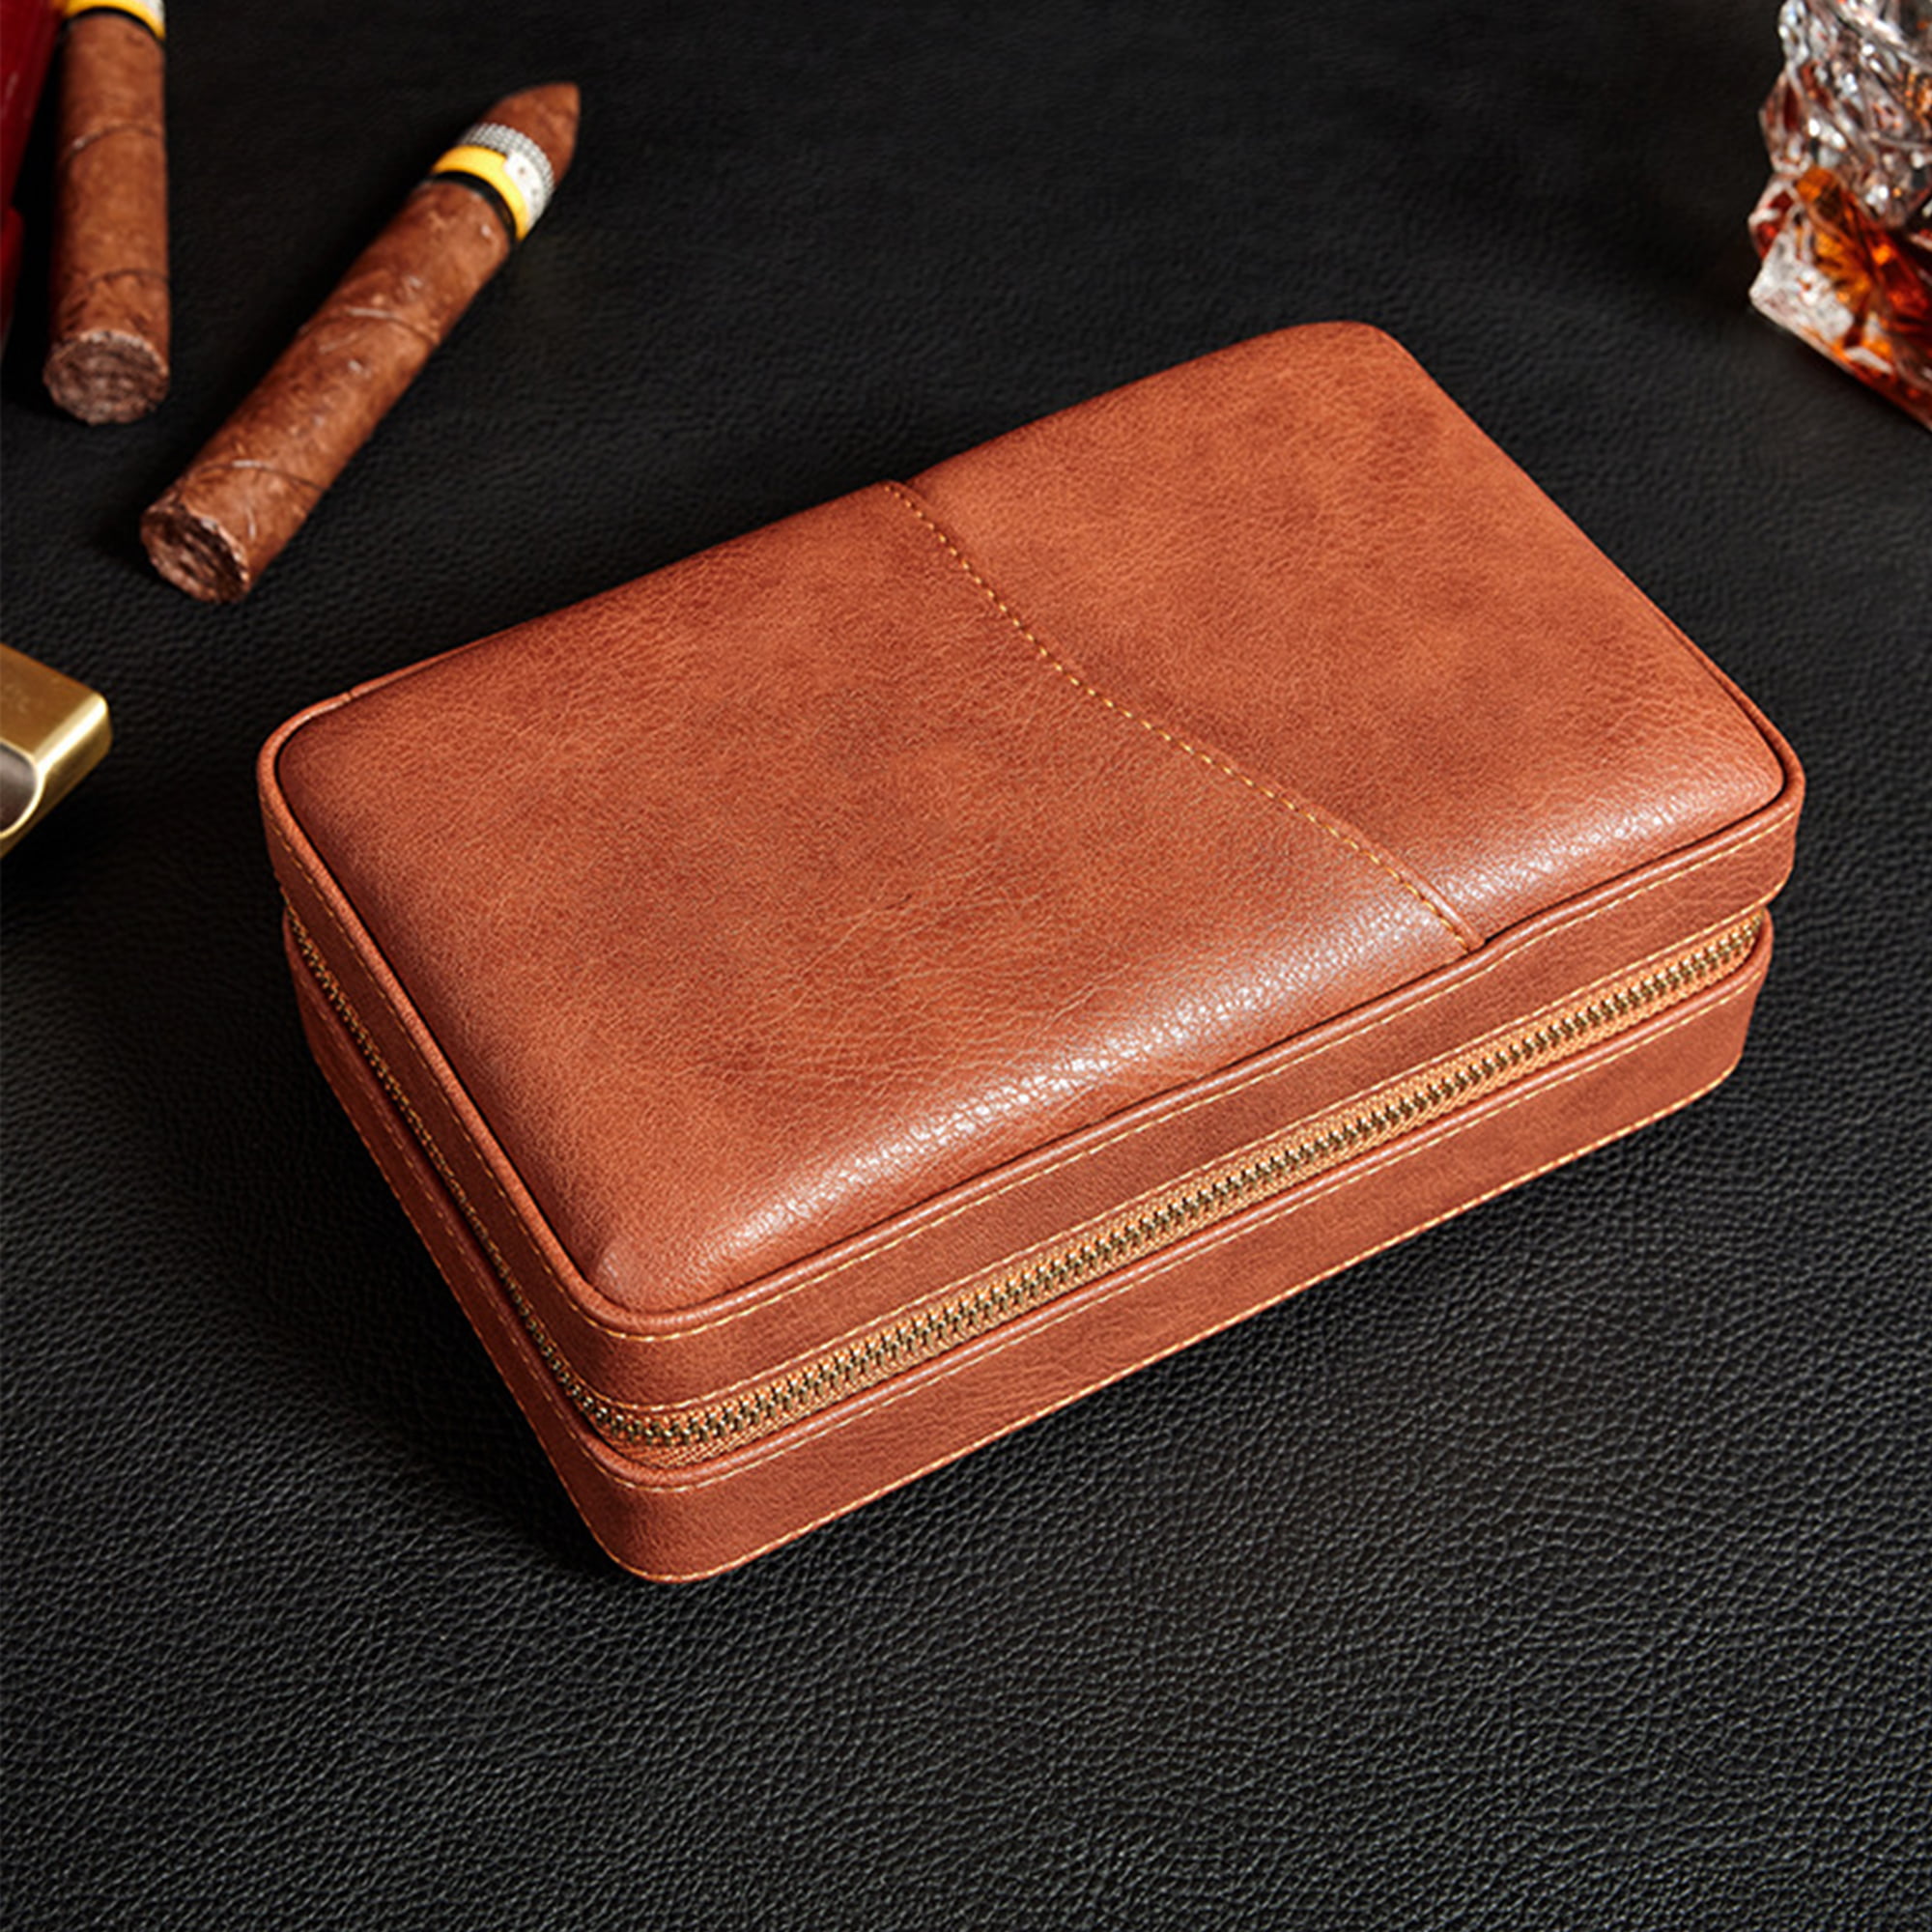 Gudamaye Cigar Case,Cedar Wood Travel Leather Cigar Case,Portable Travel  Leather Cigar Case Built in Hygrometer,Travel Cigar Case Humidor,Cigar